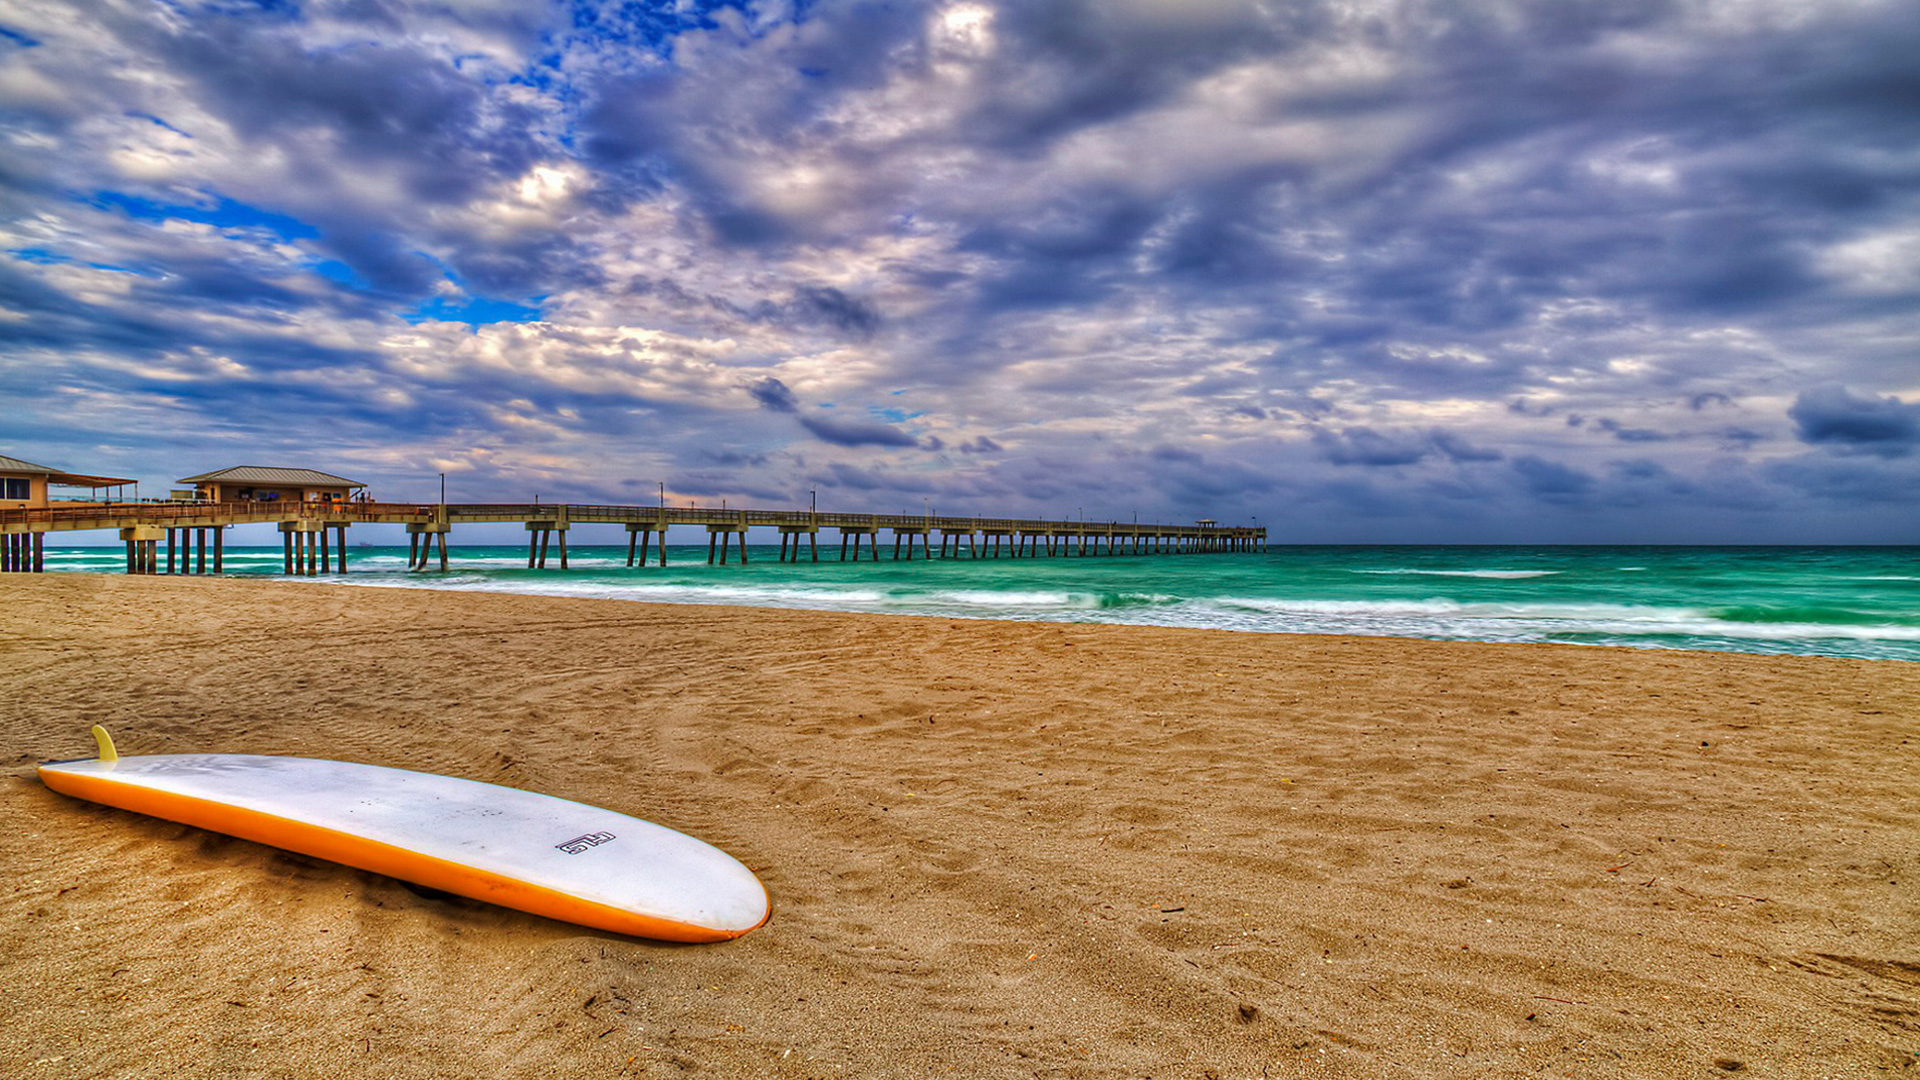 Surfing Board At Beach